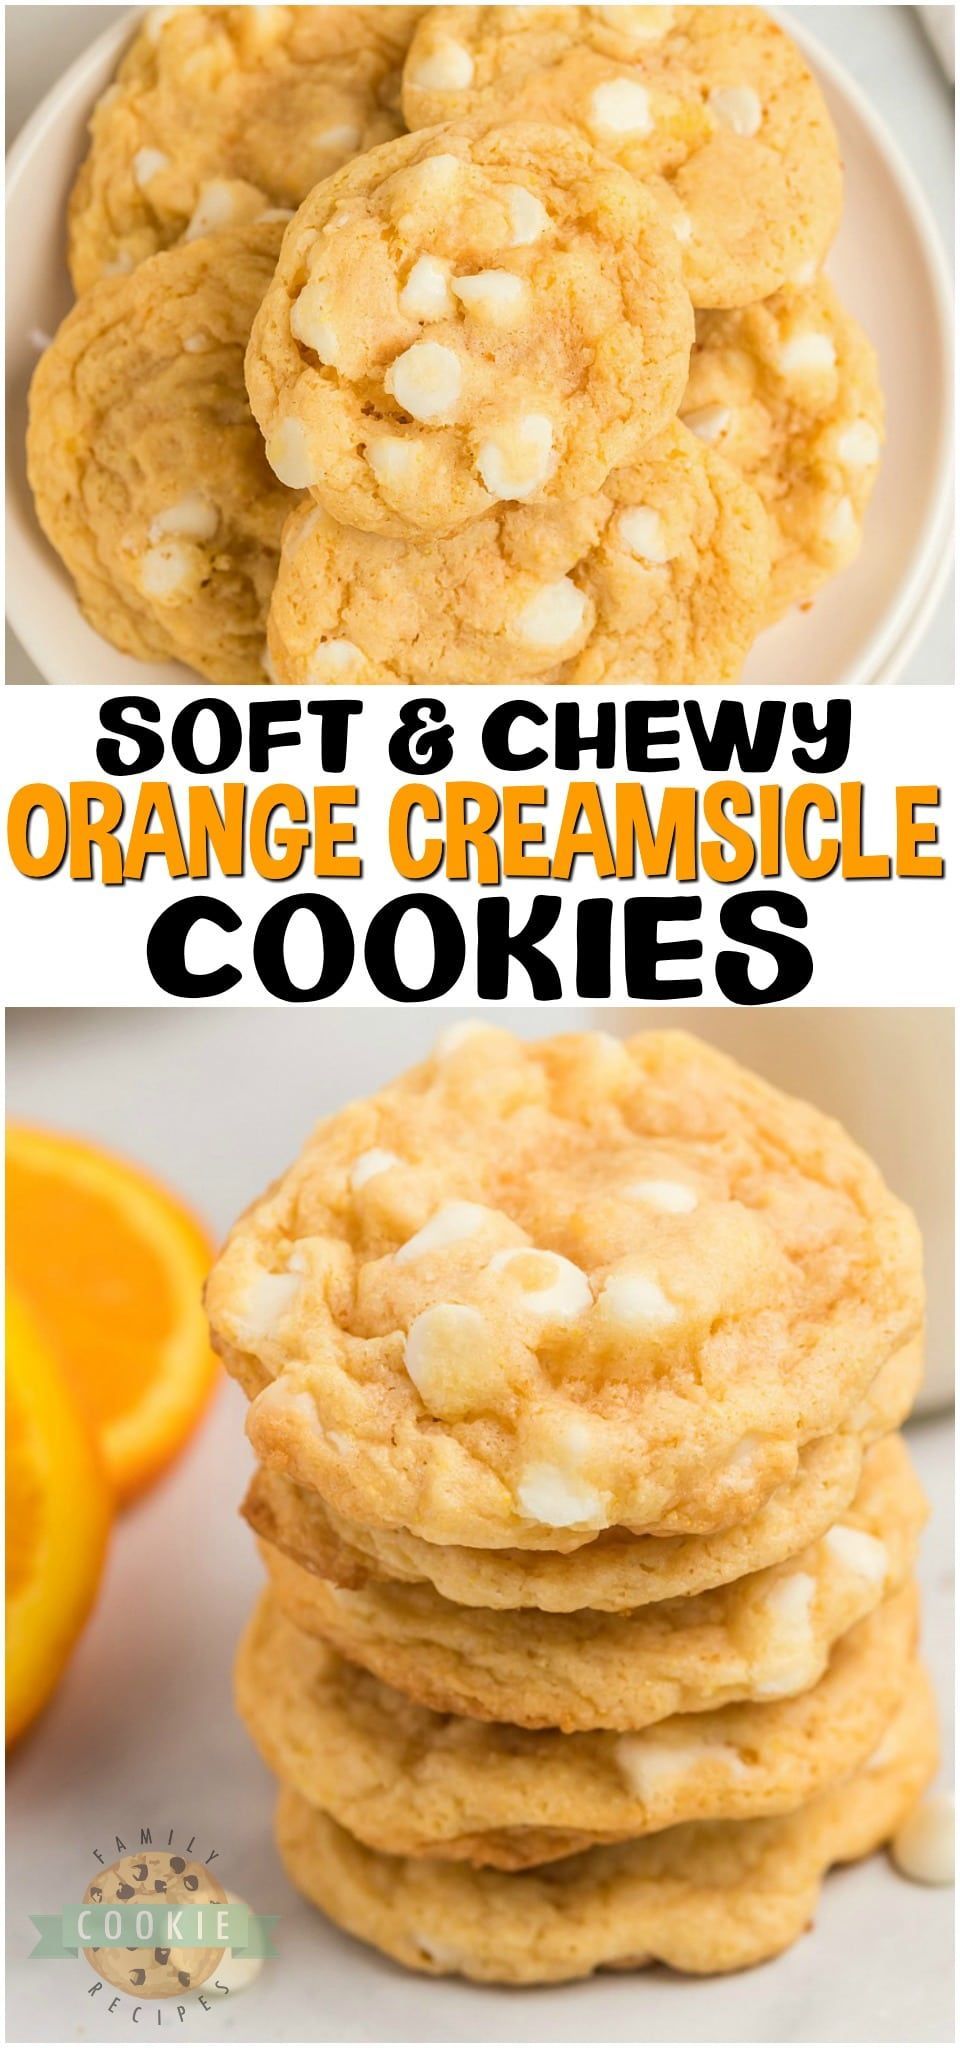 ORANGE CREAMSICLE COOKIES - Family Cookie Recipes -   19 desserts Rezepte cookies ideas